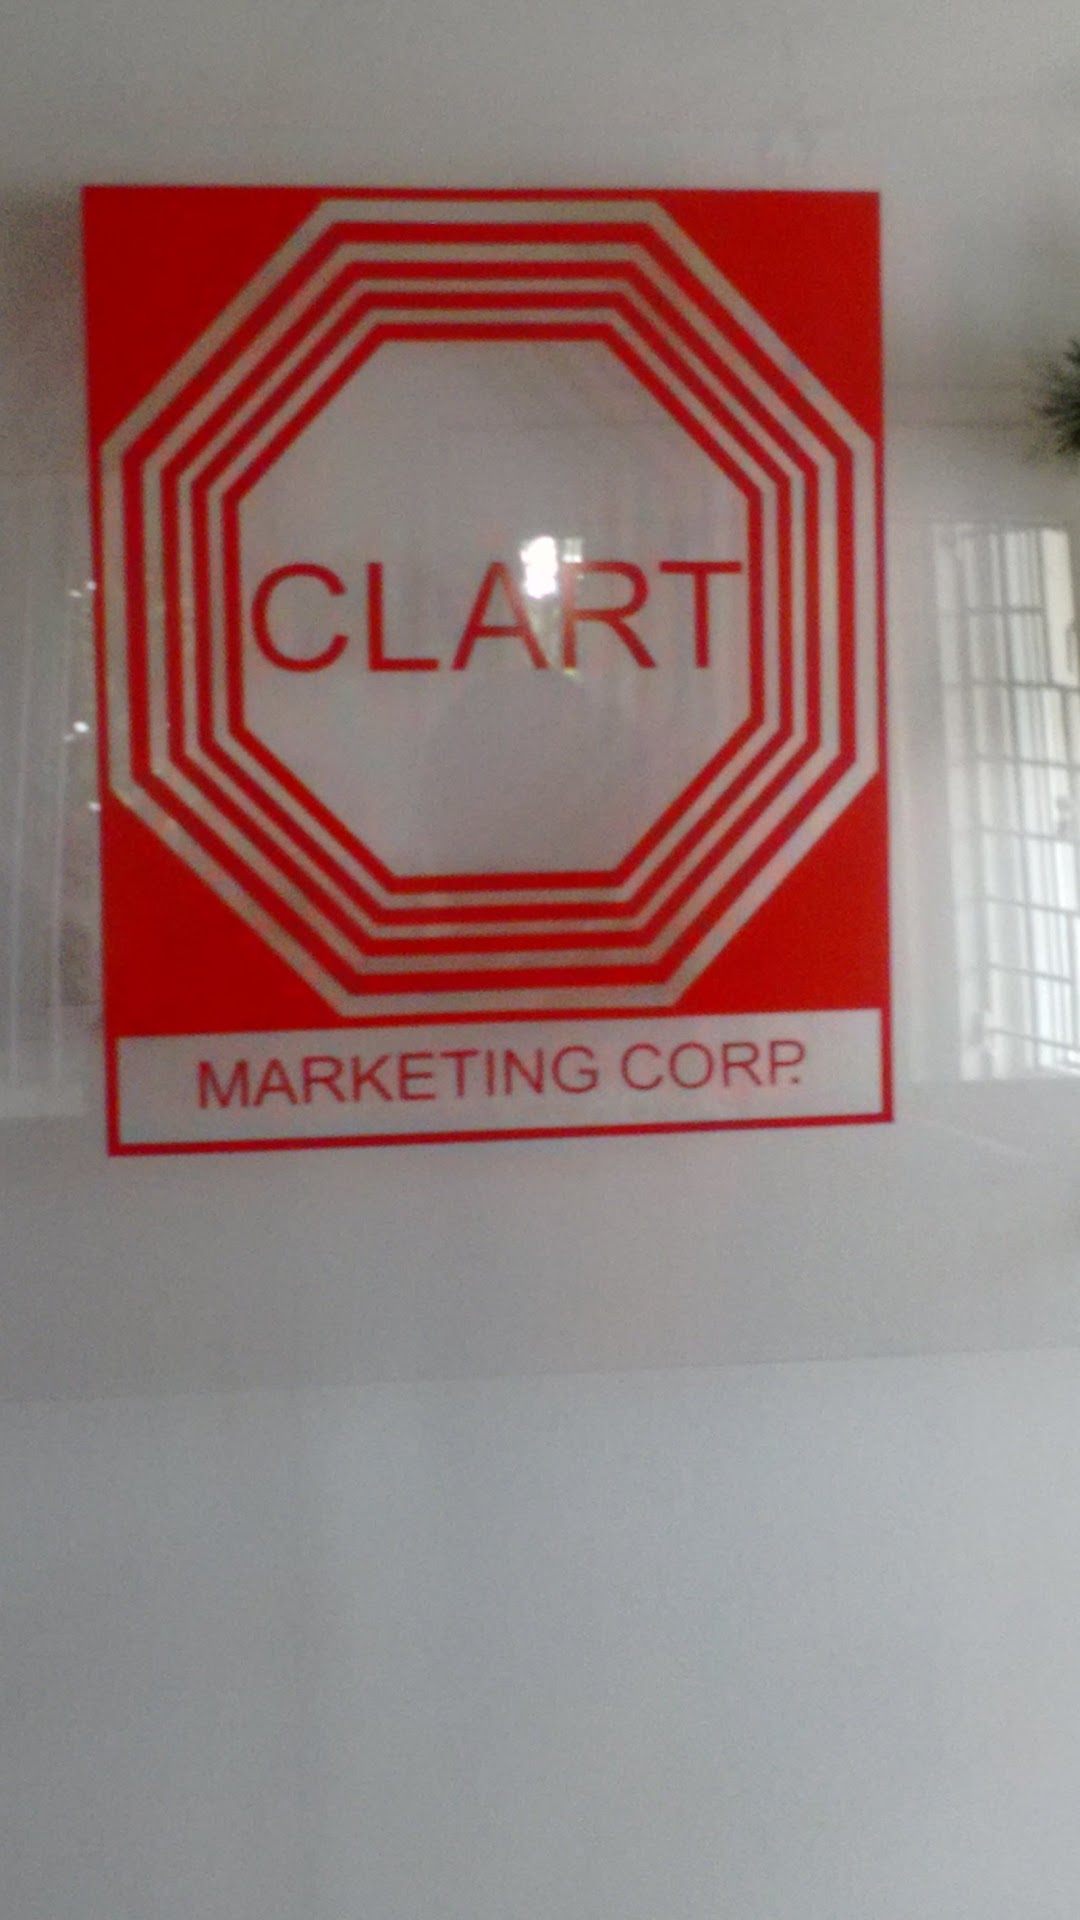 Clart Marketing Corp.